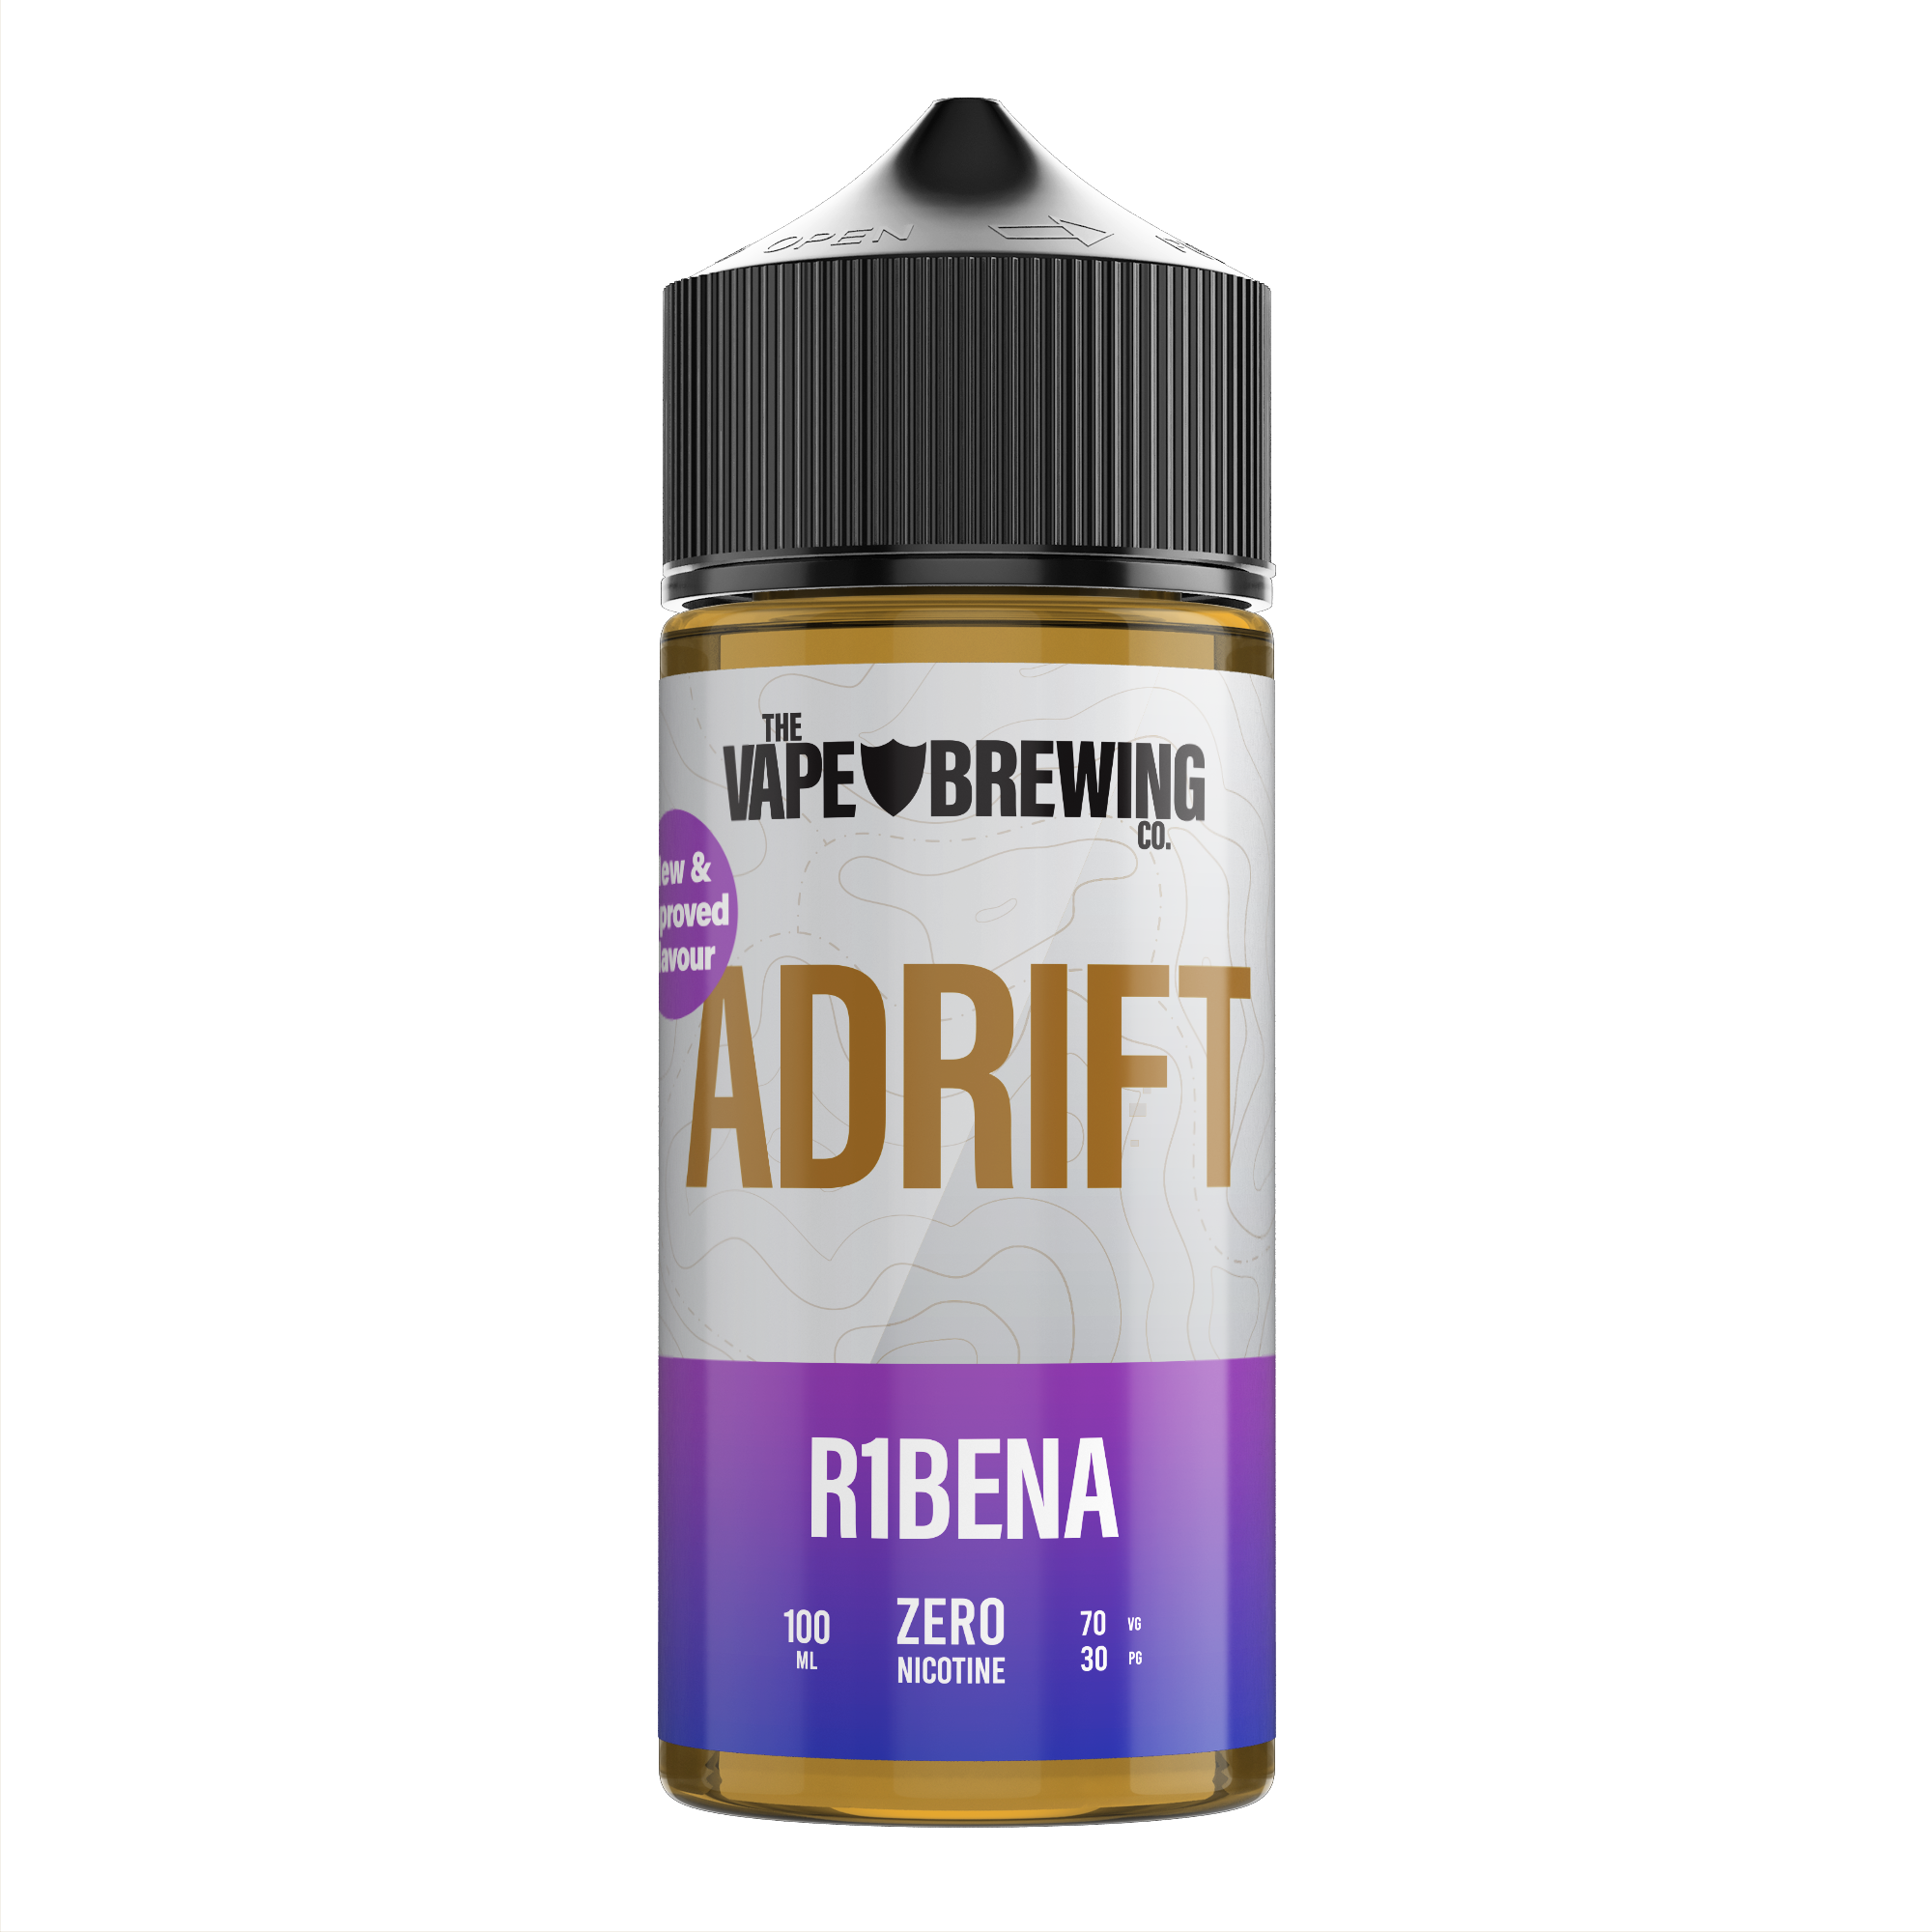 R1bena 100ml Shortfill by Adrift Vape Brewing Co.